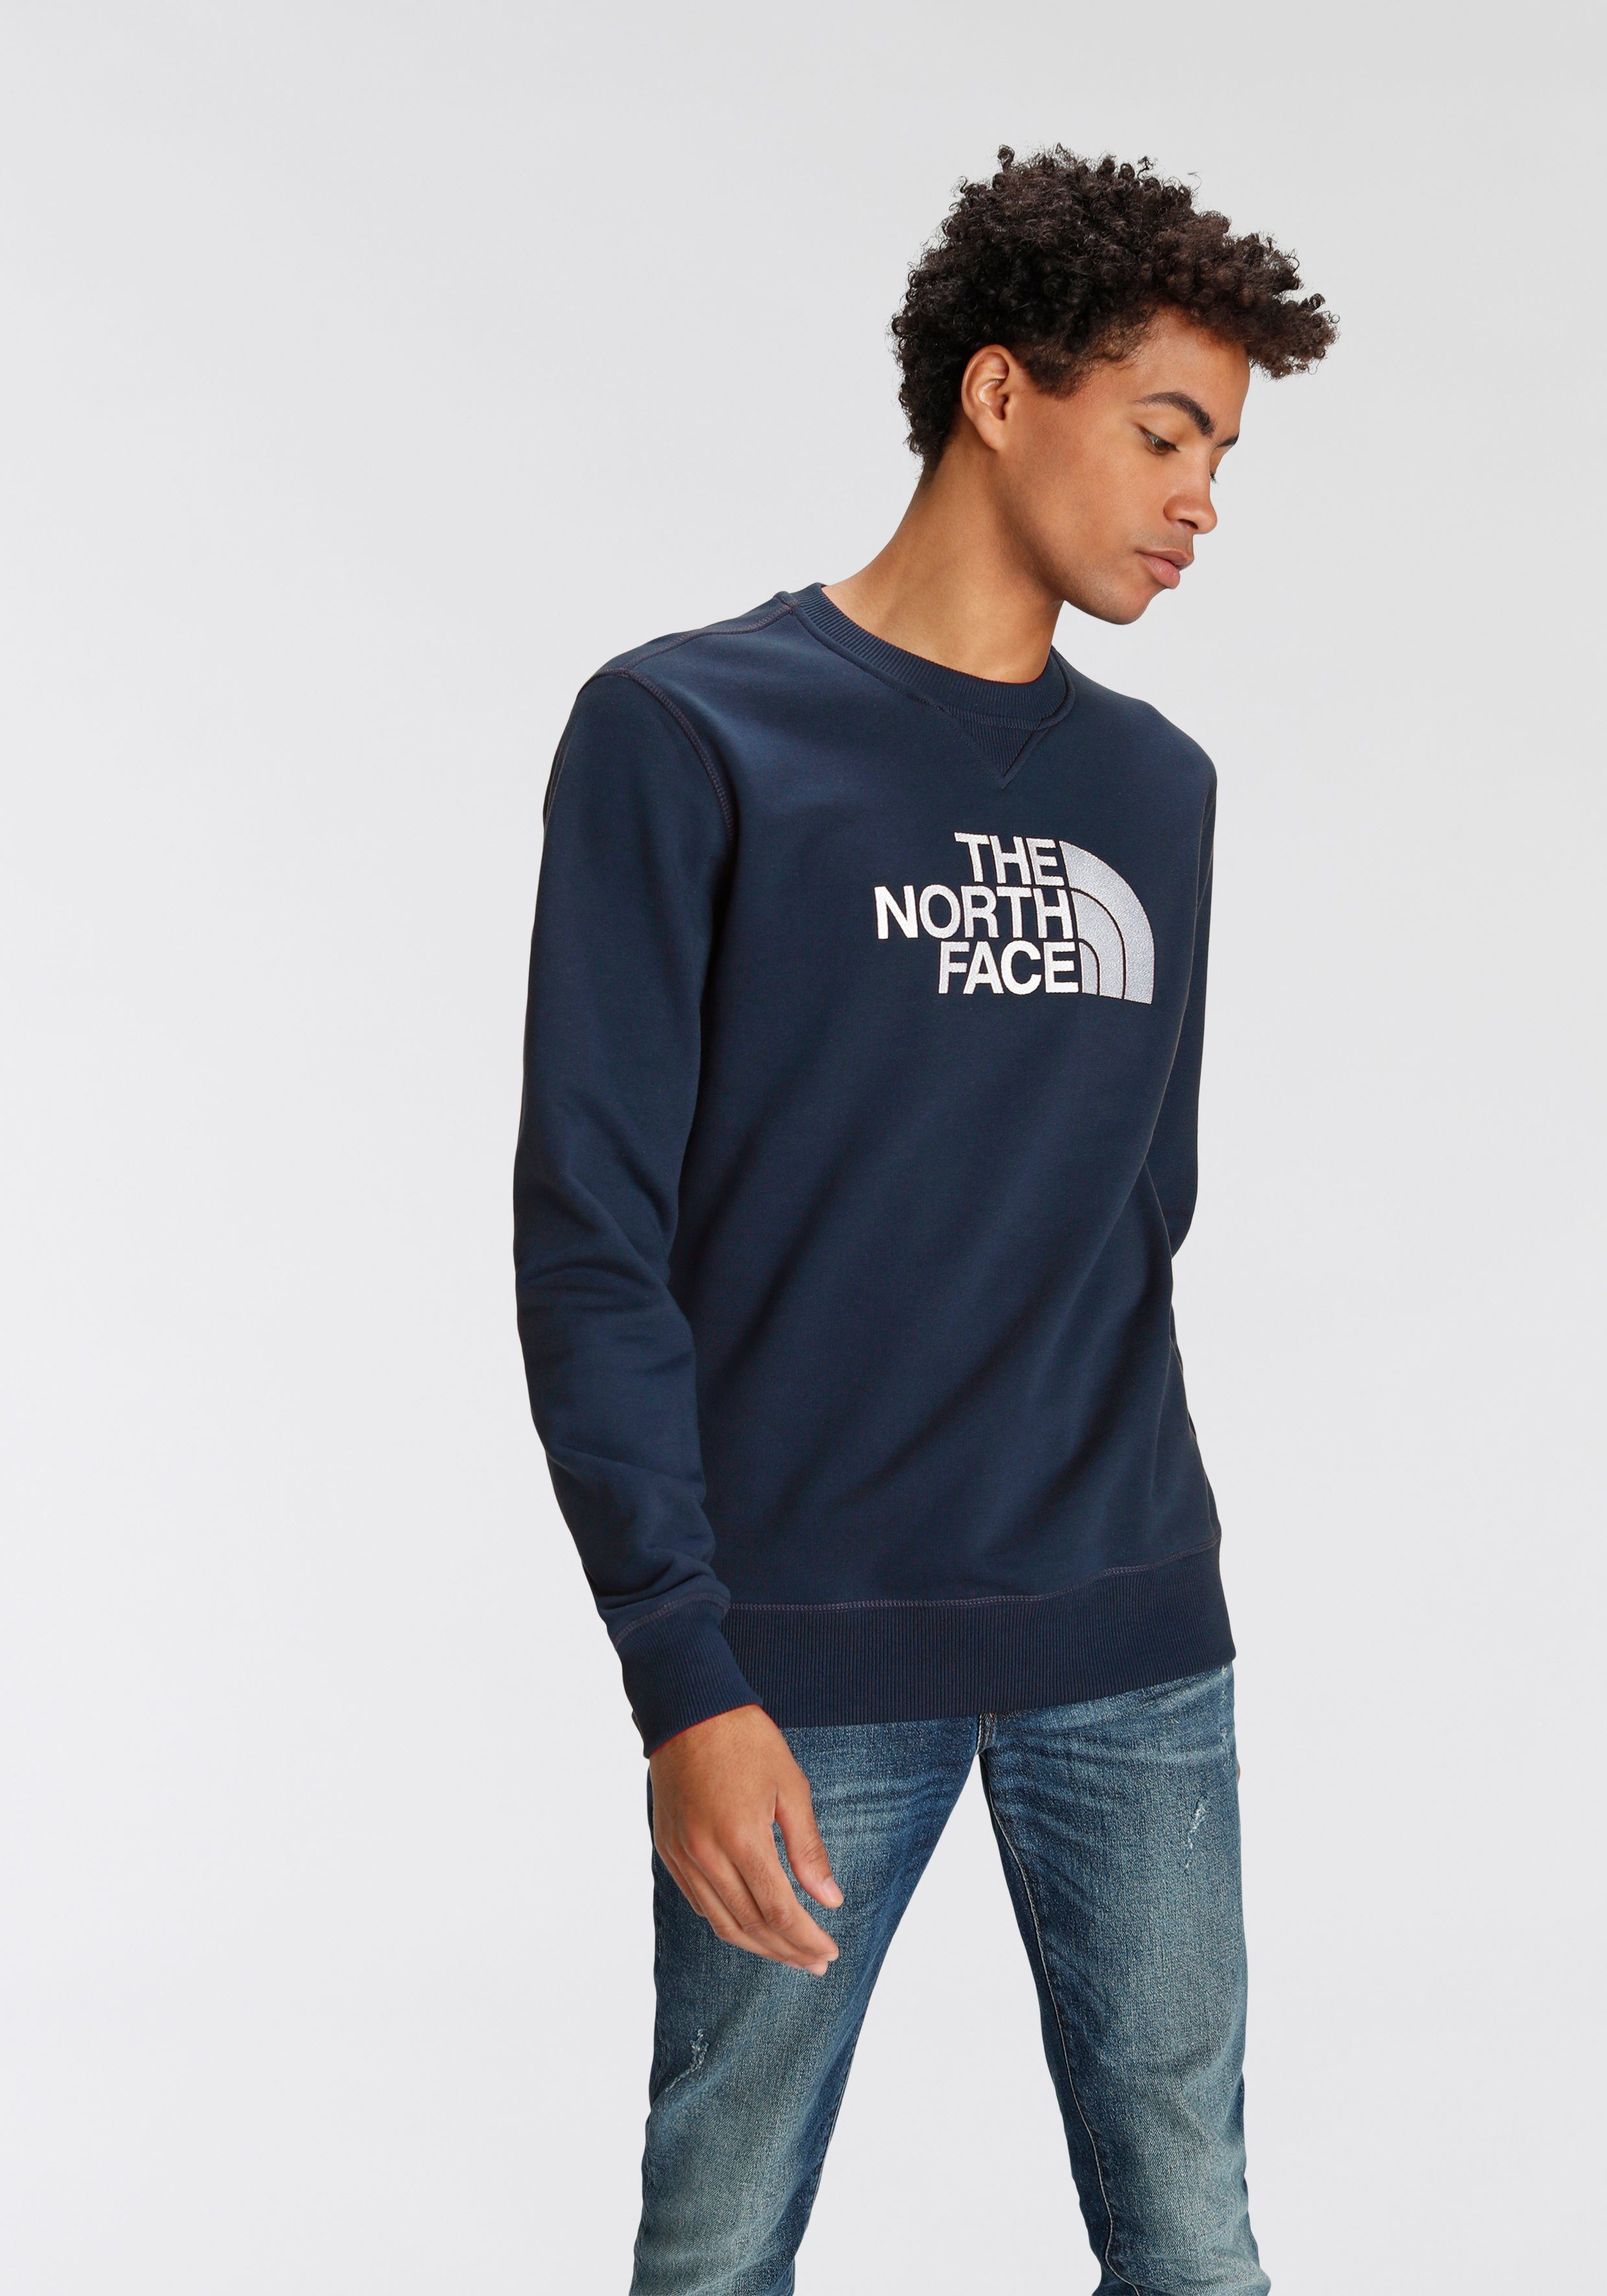 The North Face marine Sweatshirt DREW PEAK